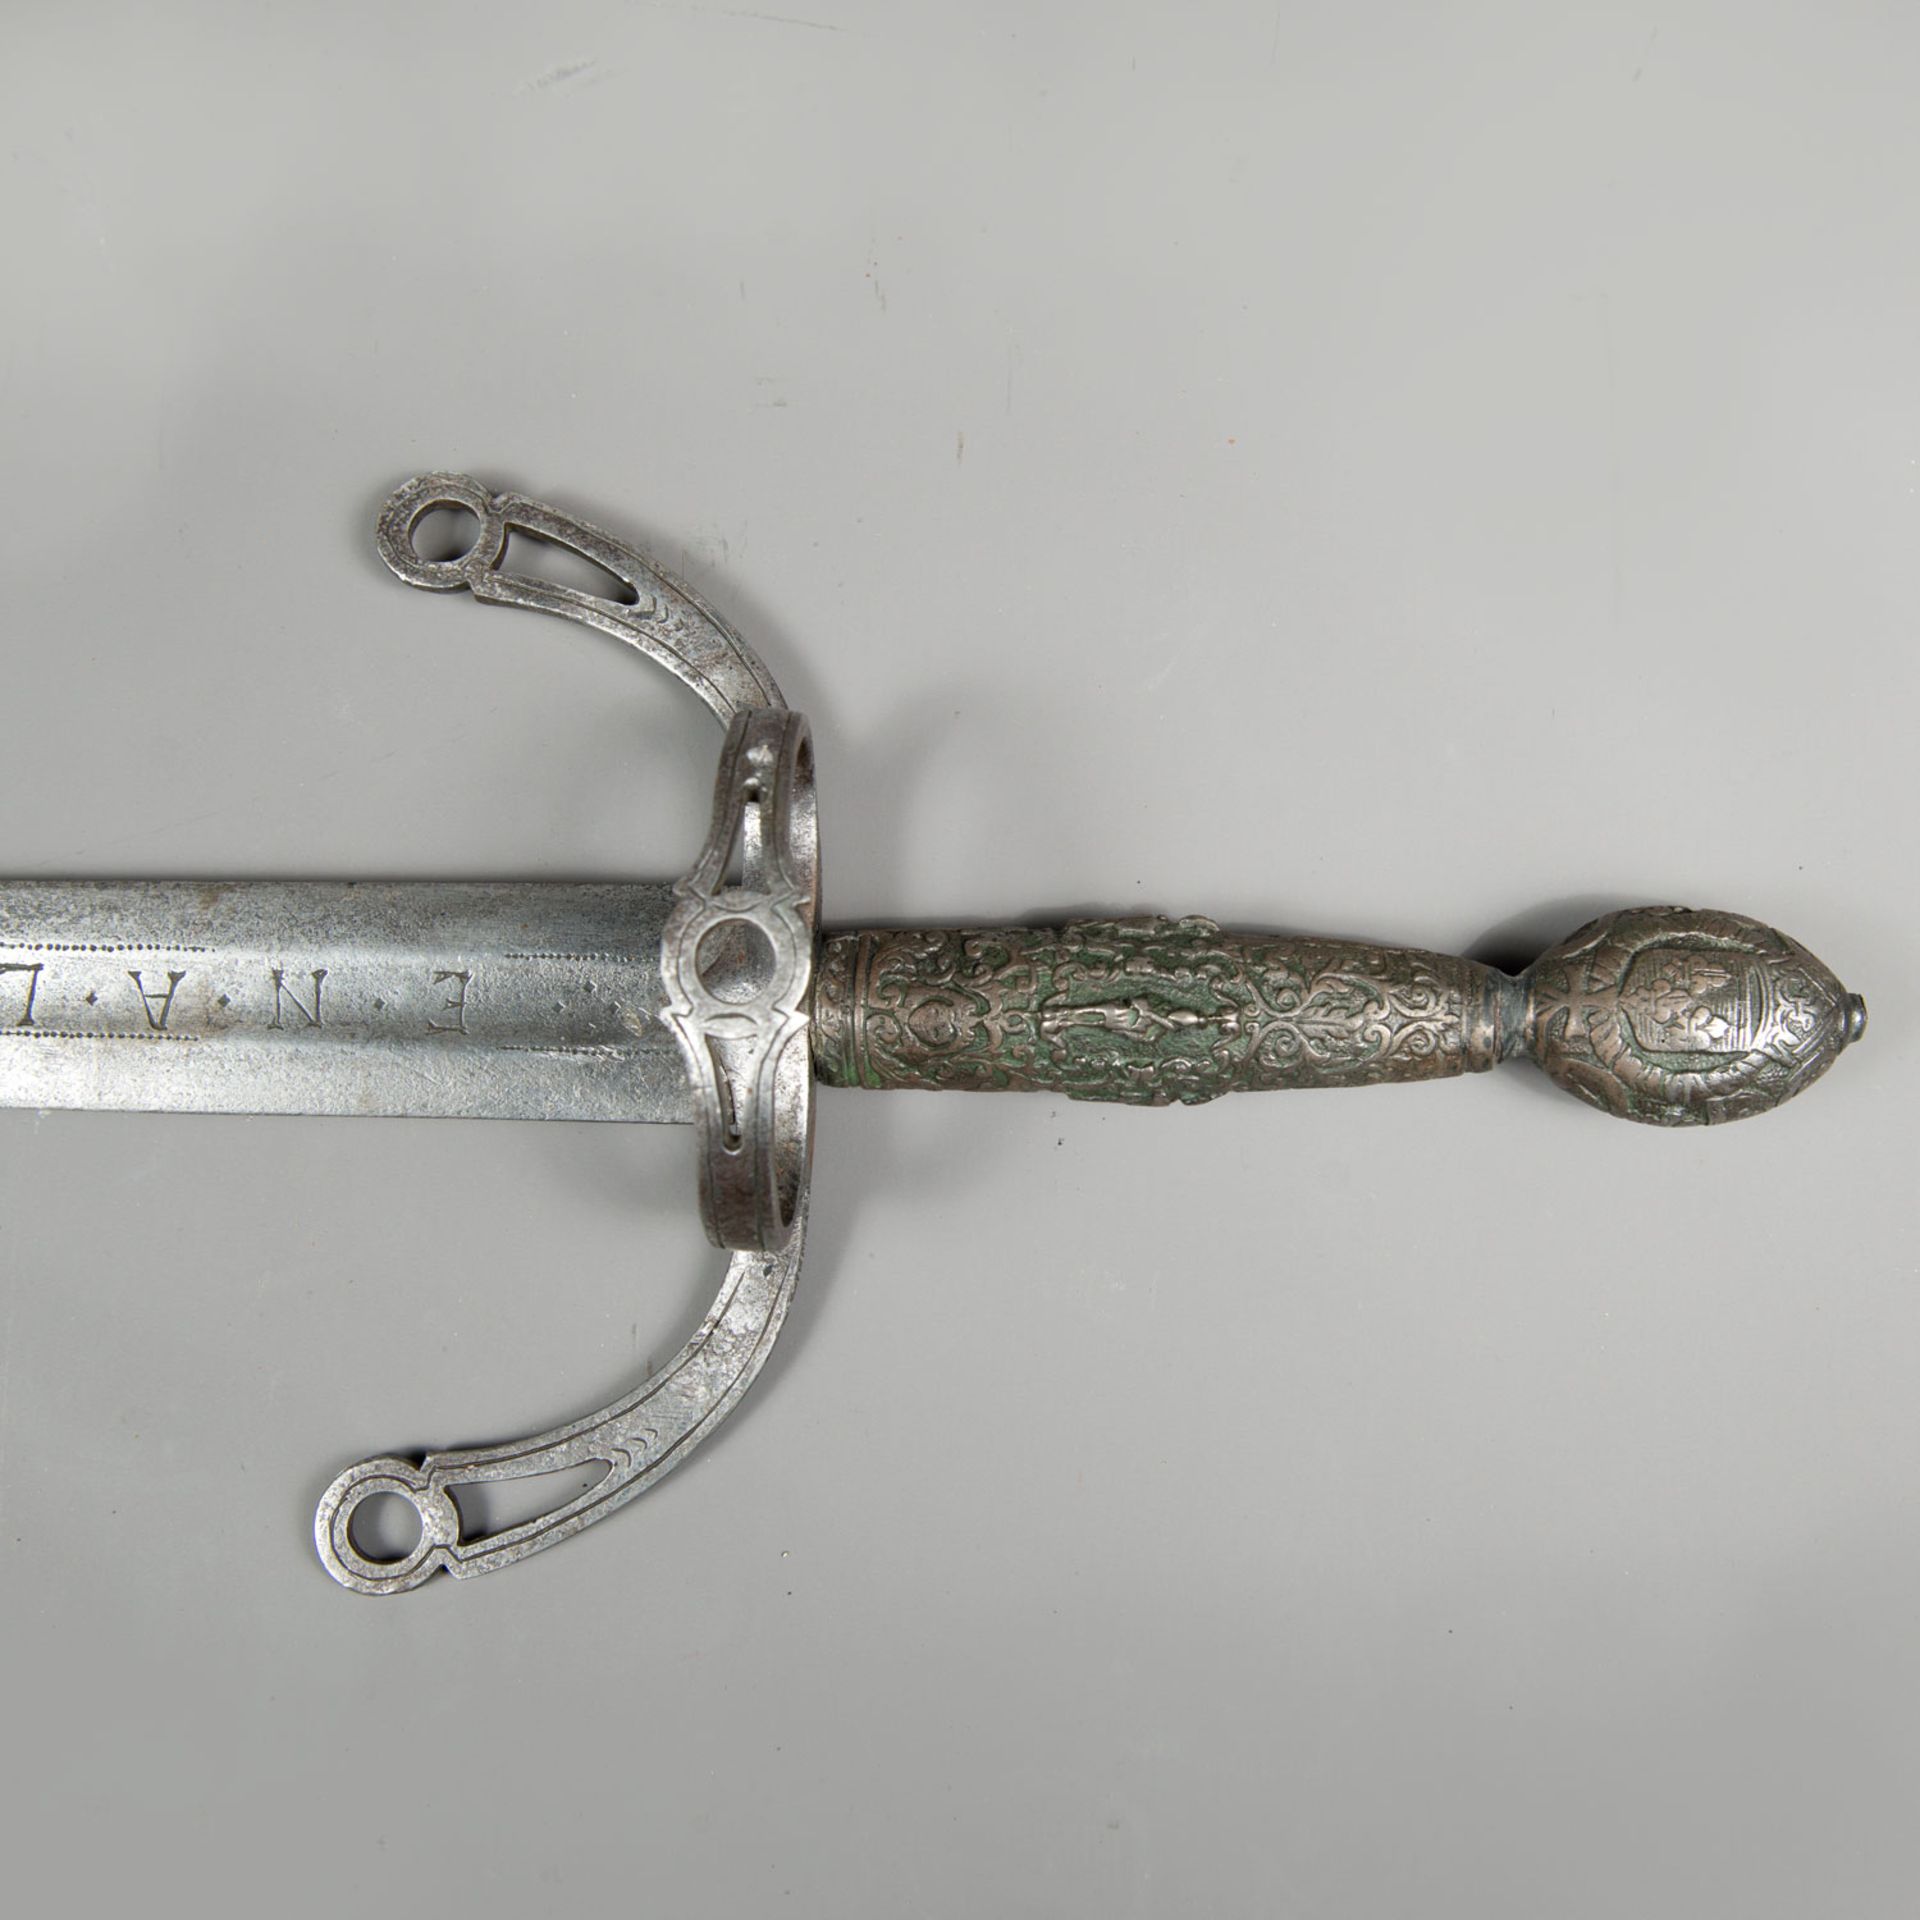 Spanish sword - Image 3 of 3